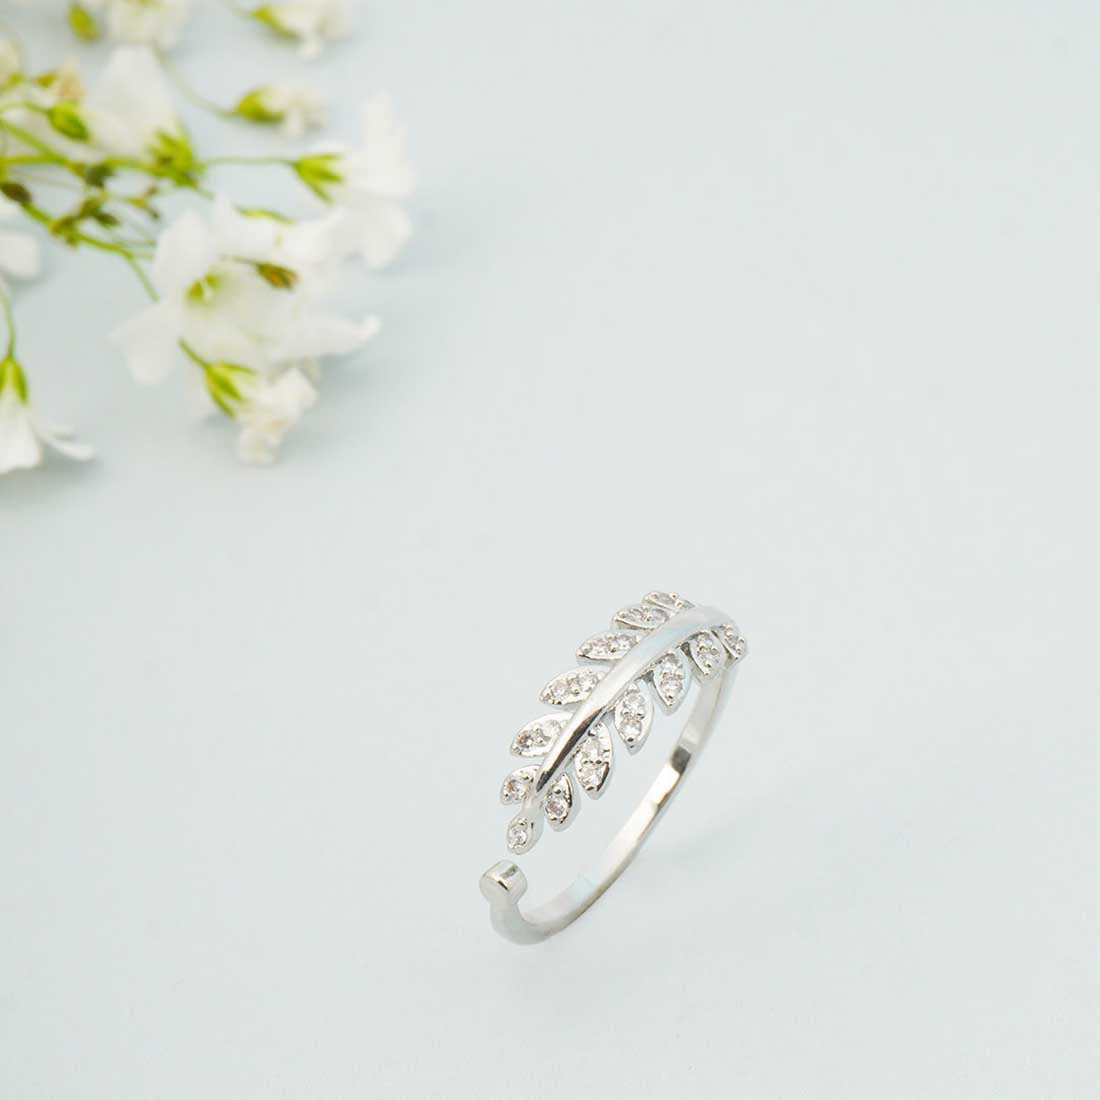 Silver-Toned & White Stone-Studded Adjustable Finger Ring